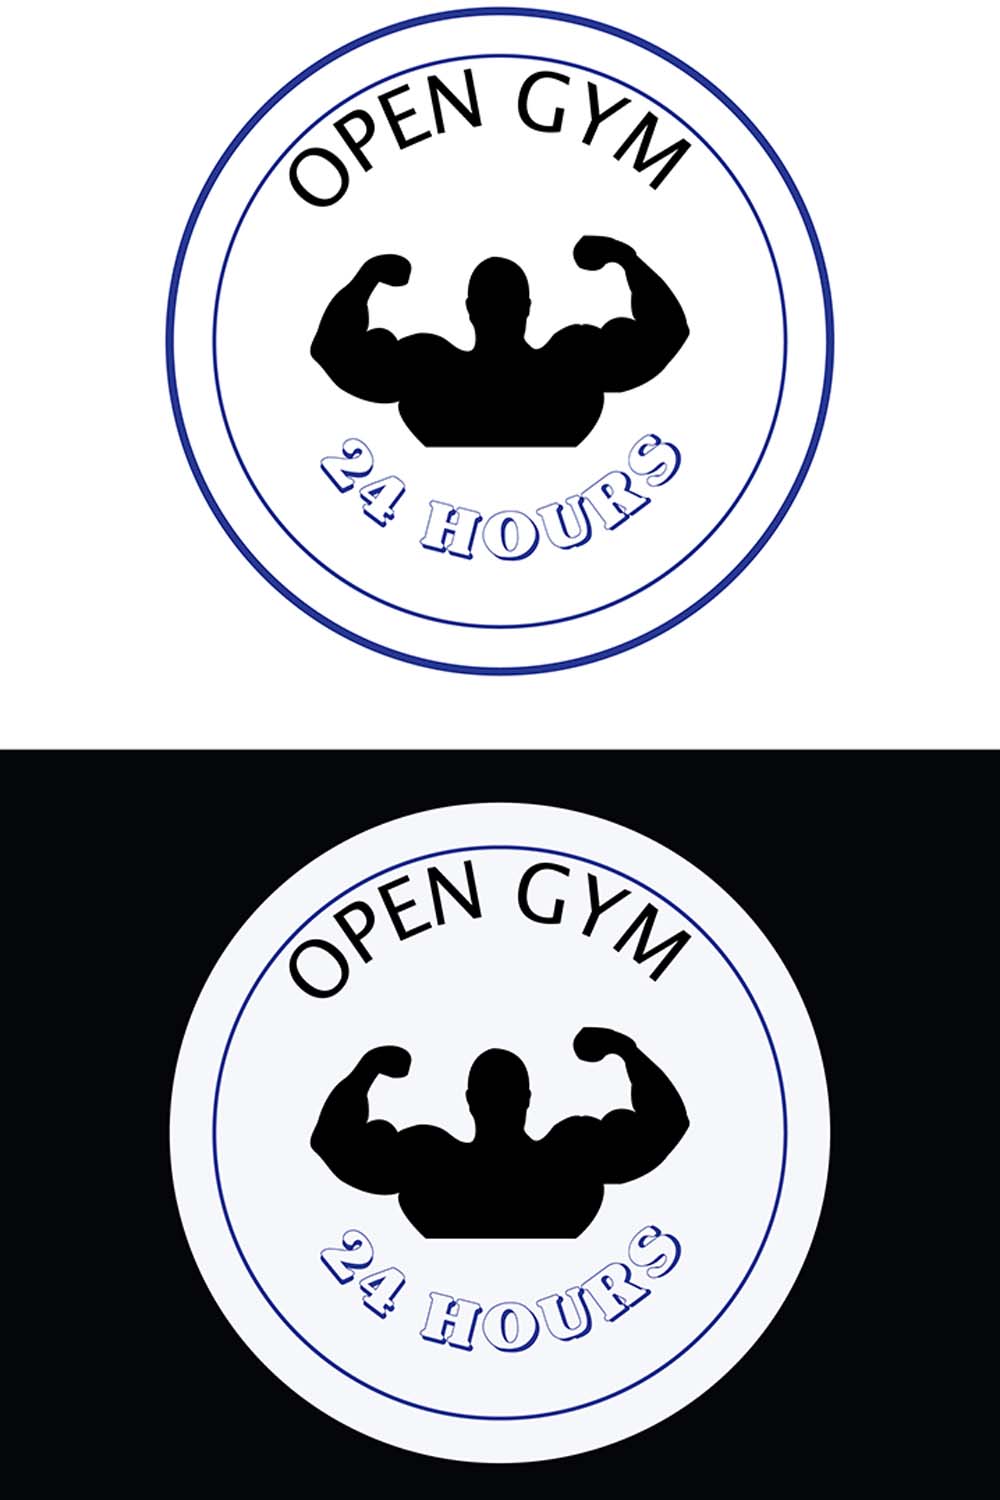 open gym logo pinterest preview image.